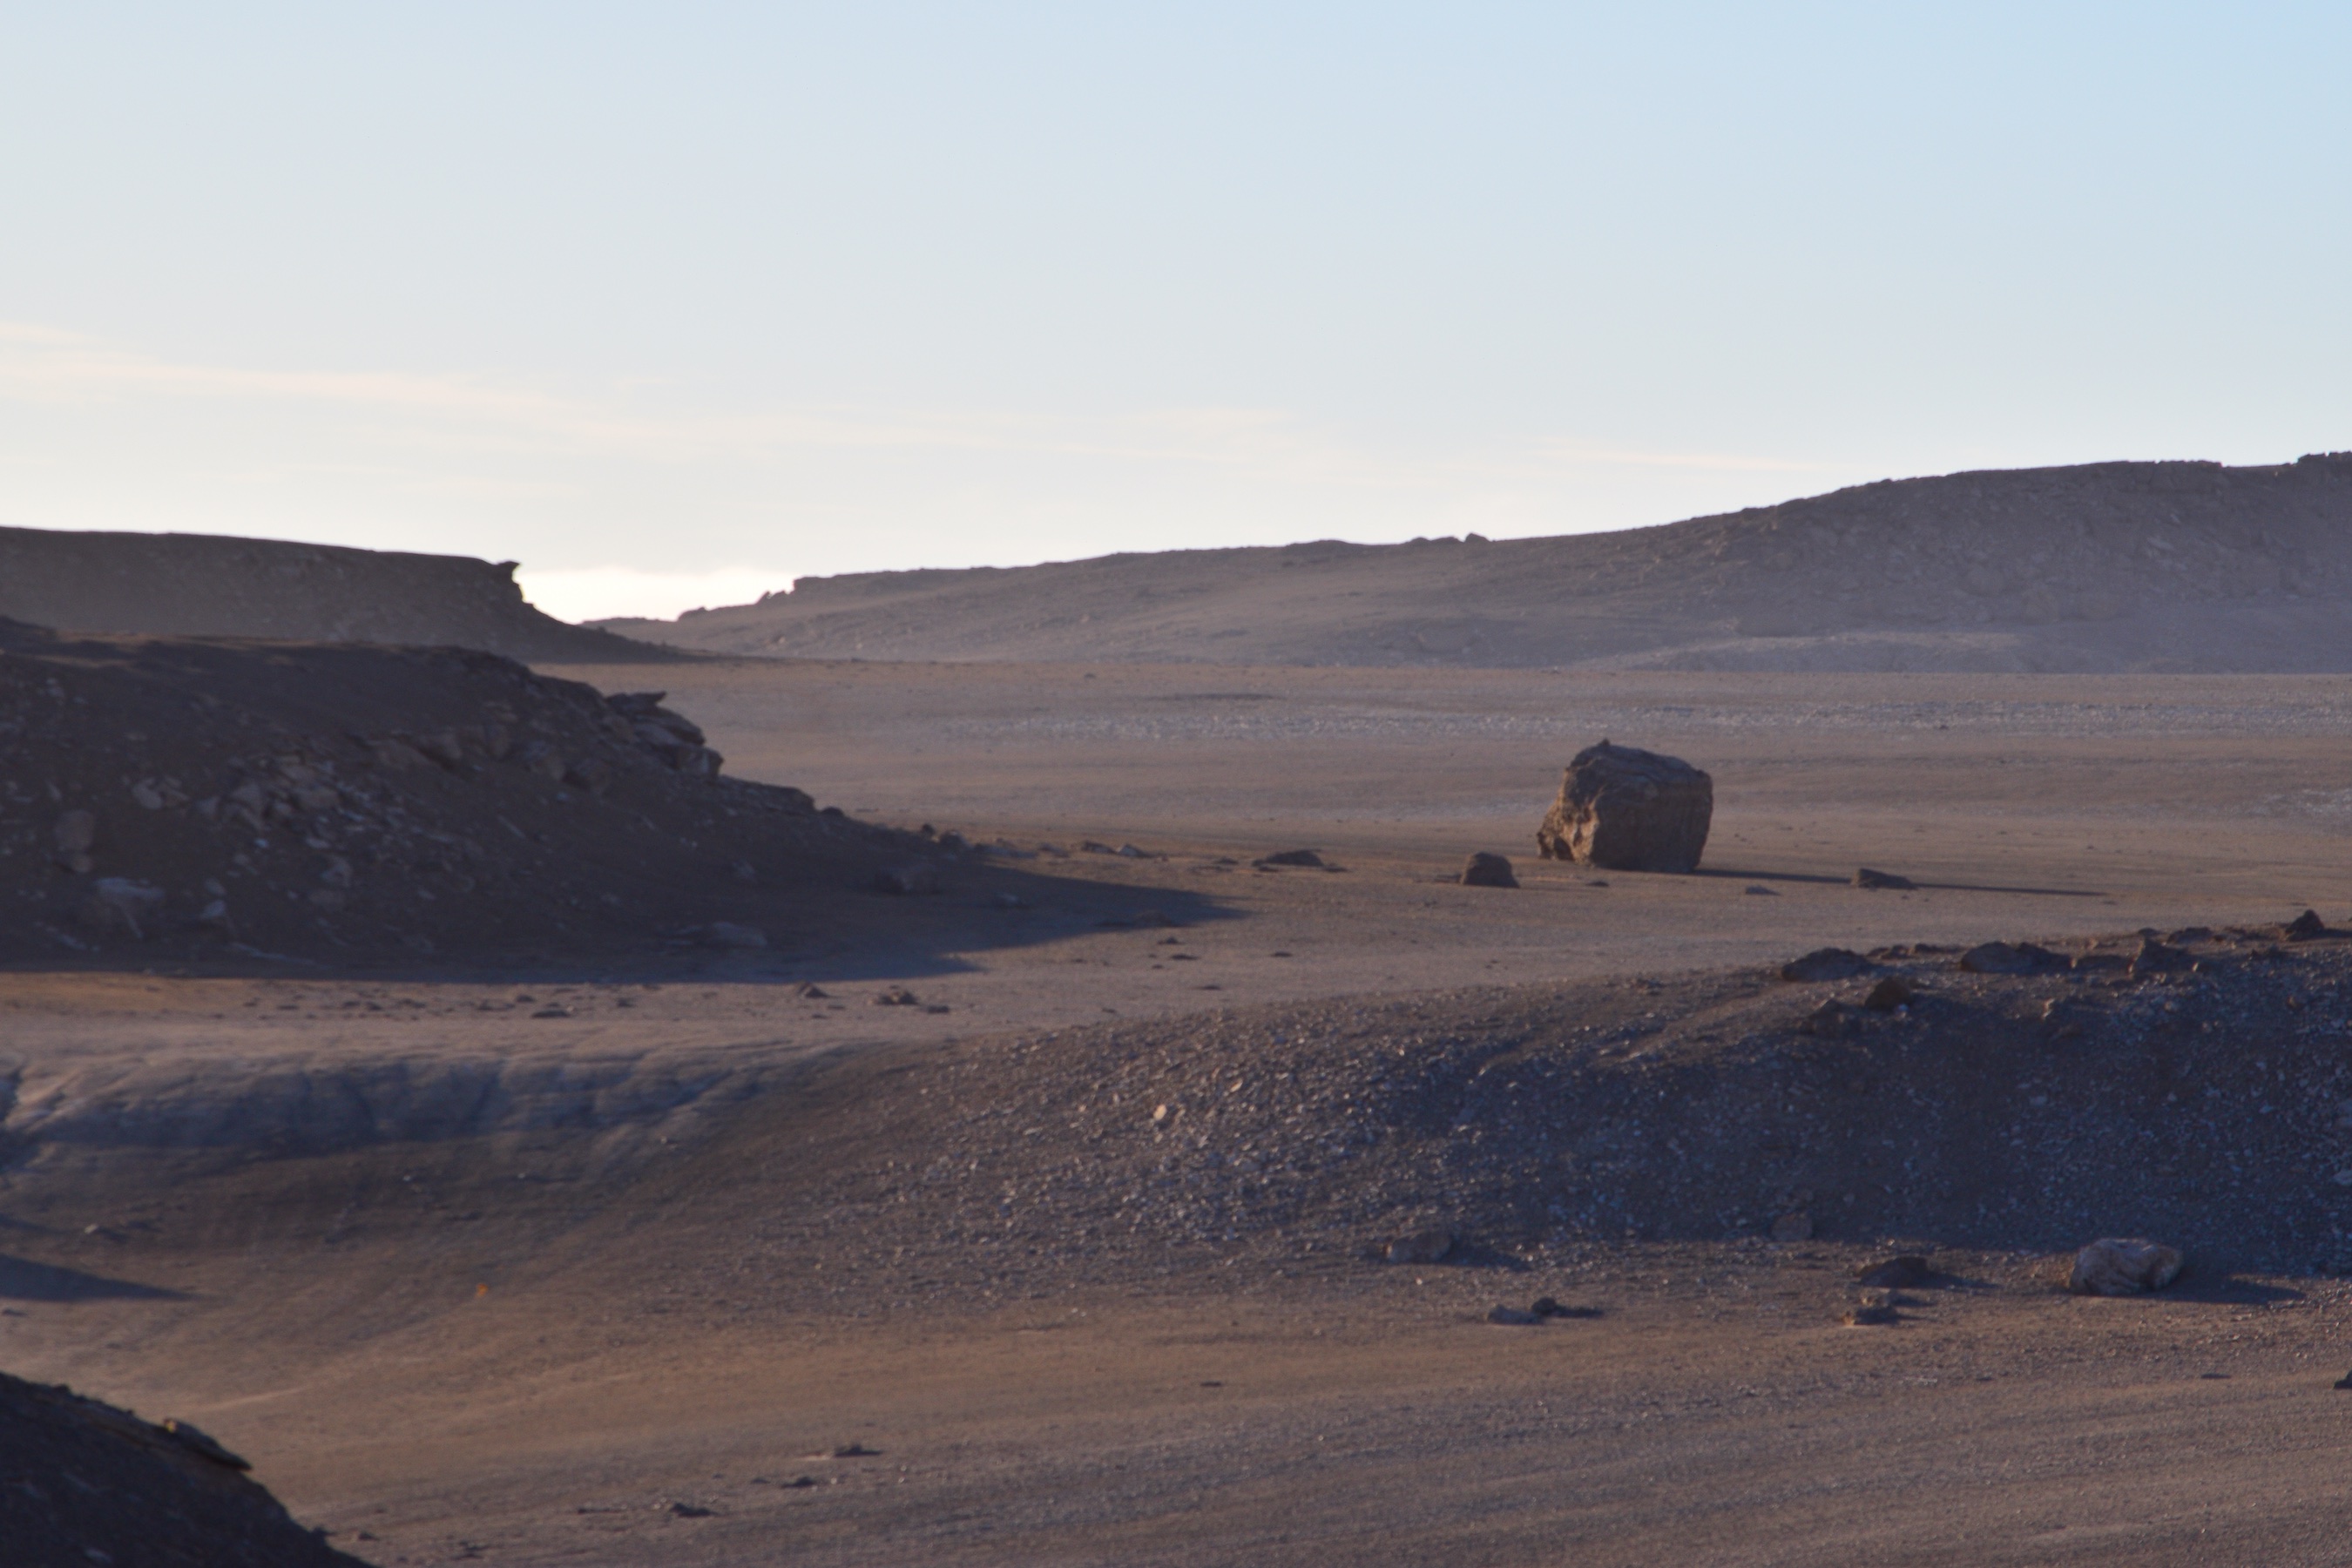 Von Braun Planitia, the sandy, windswept plain adjacent to the Haughton-Mars Project base.